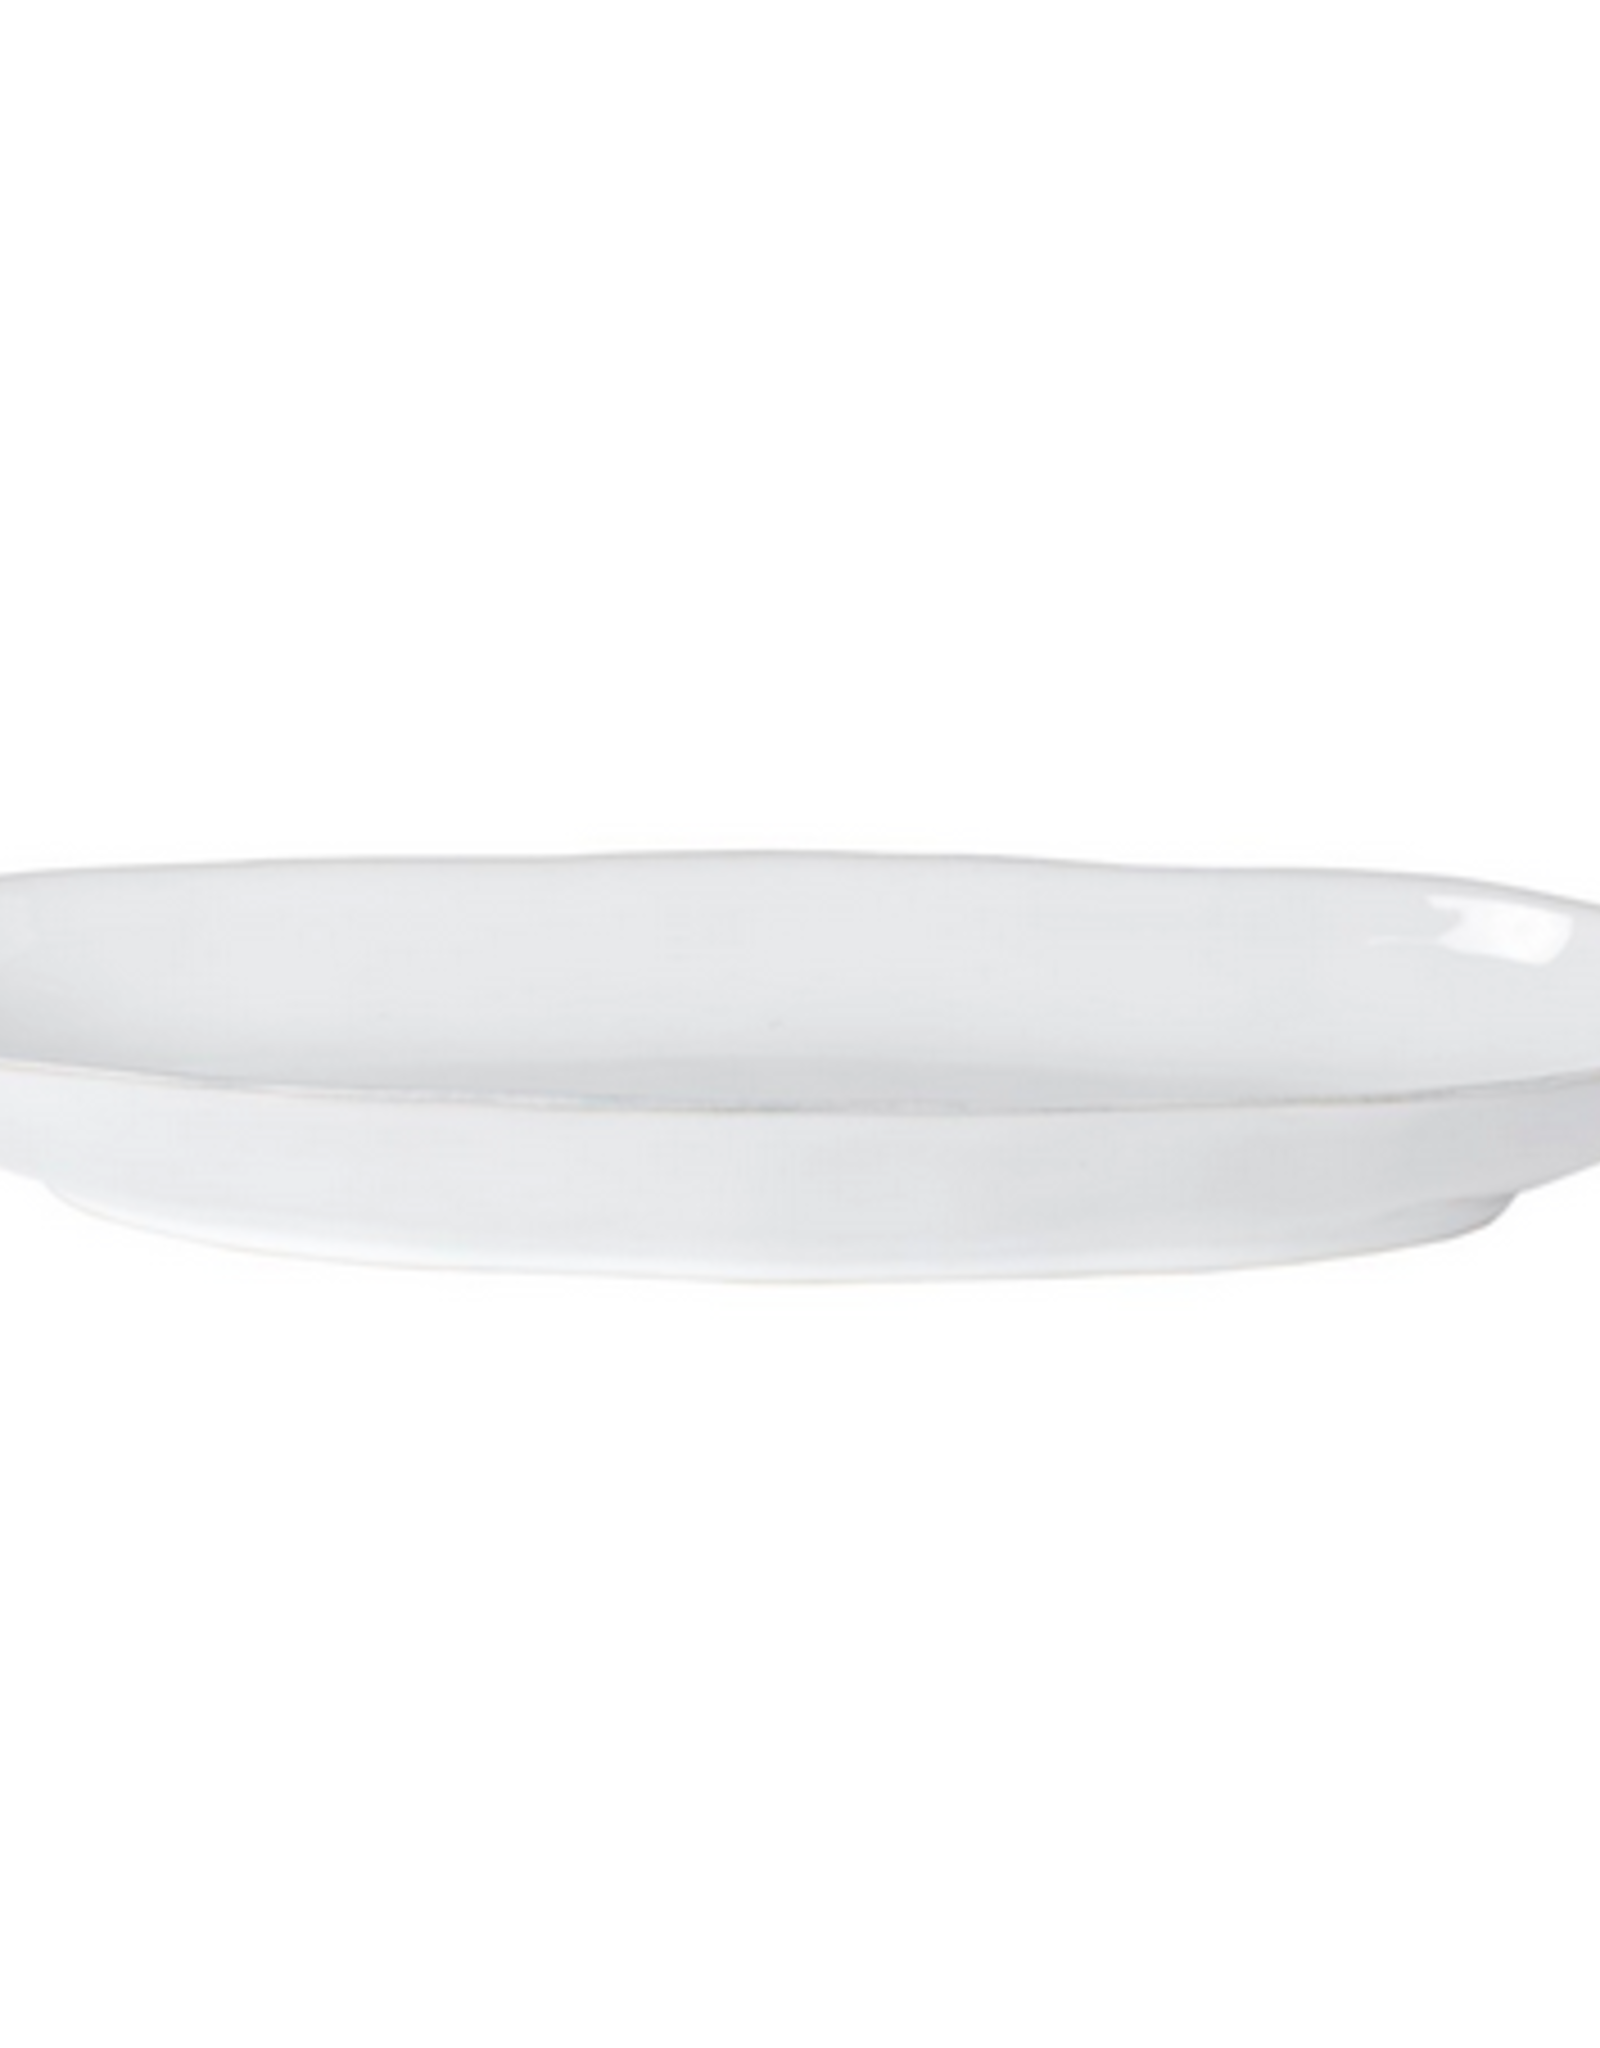 White Livia Oval Platter L16" W5.5" Reg $69 Now $35